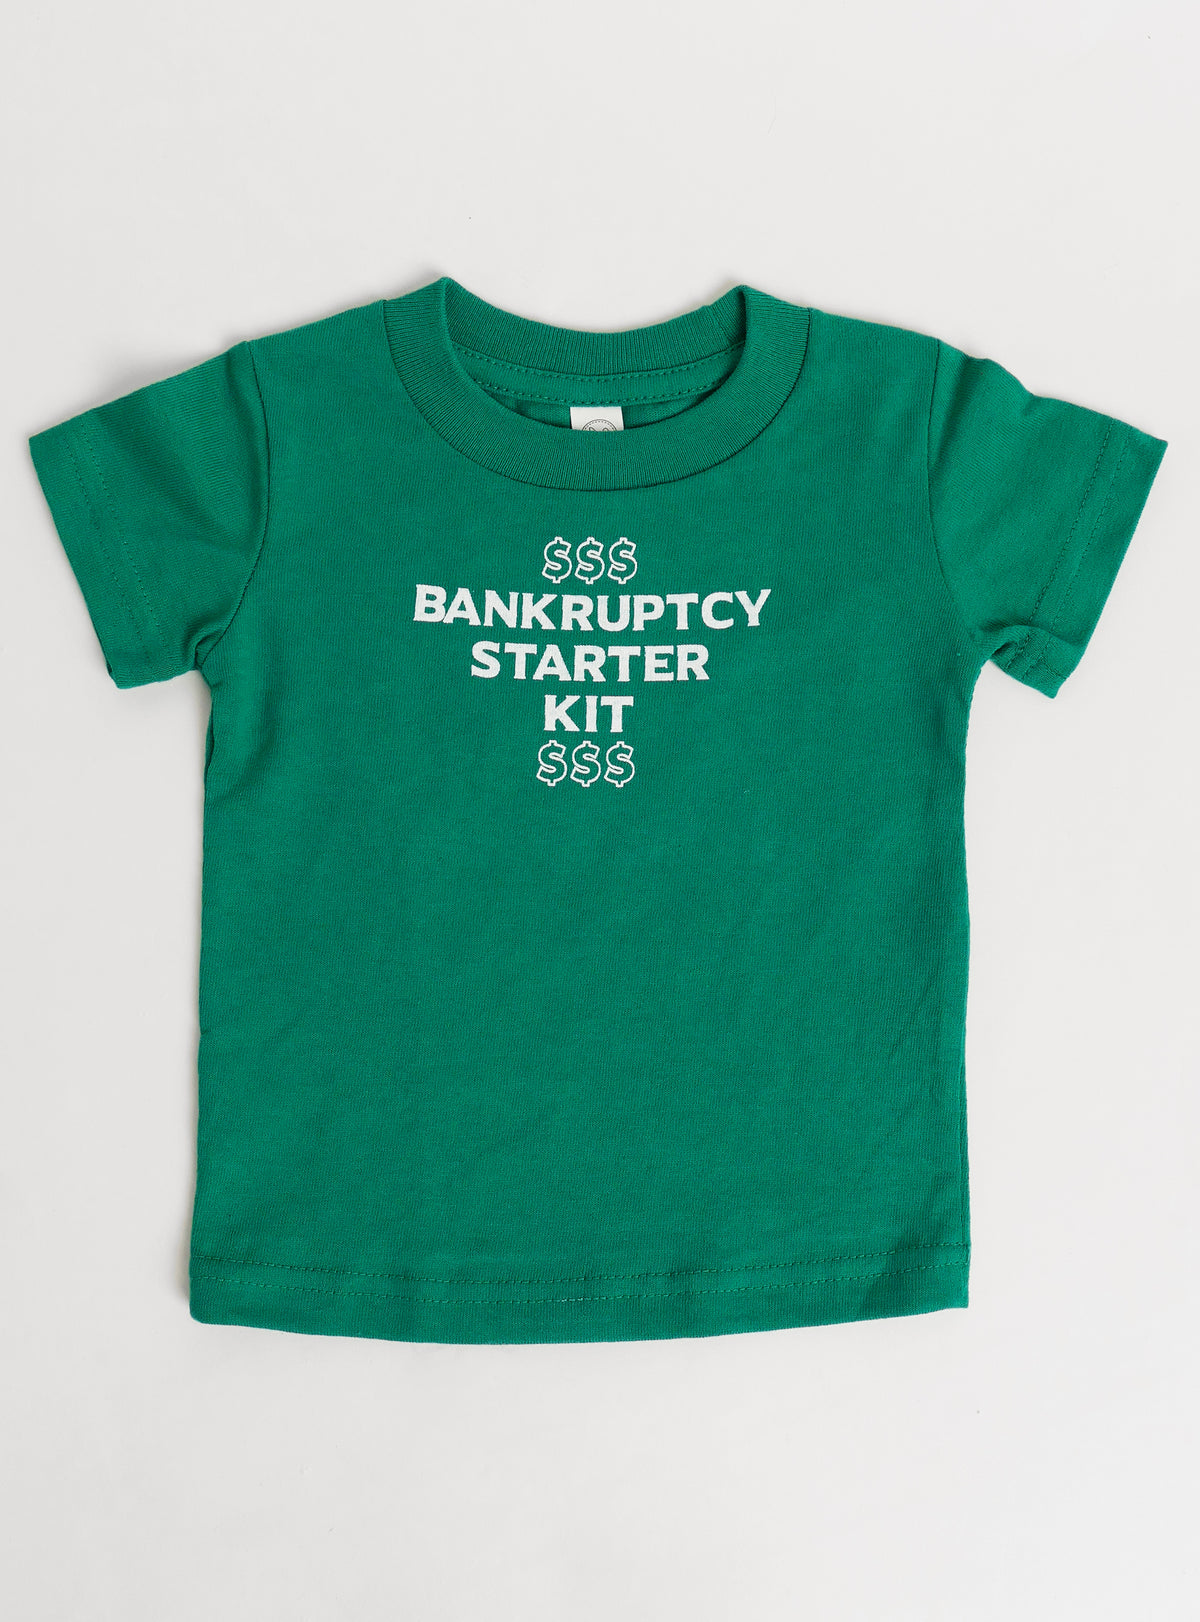 Bankruptcy Starter Kit Dog Tee